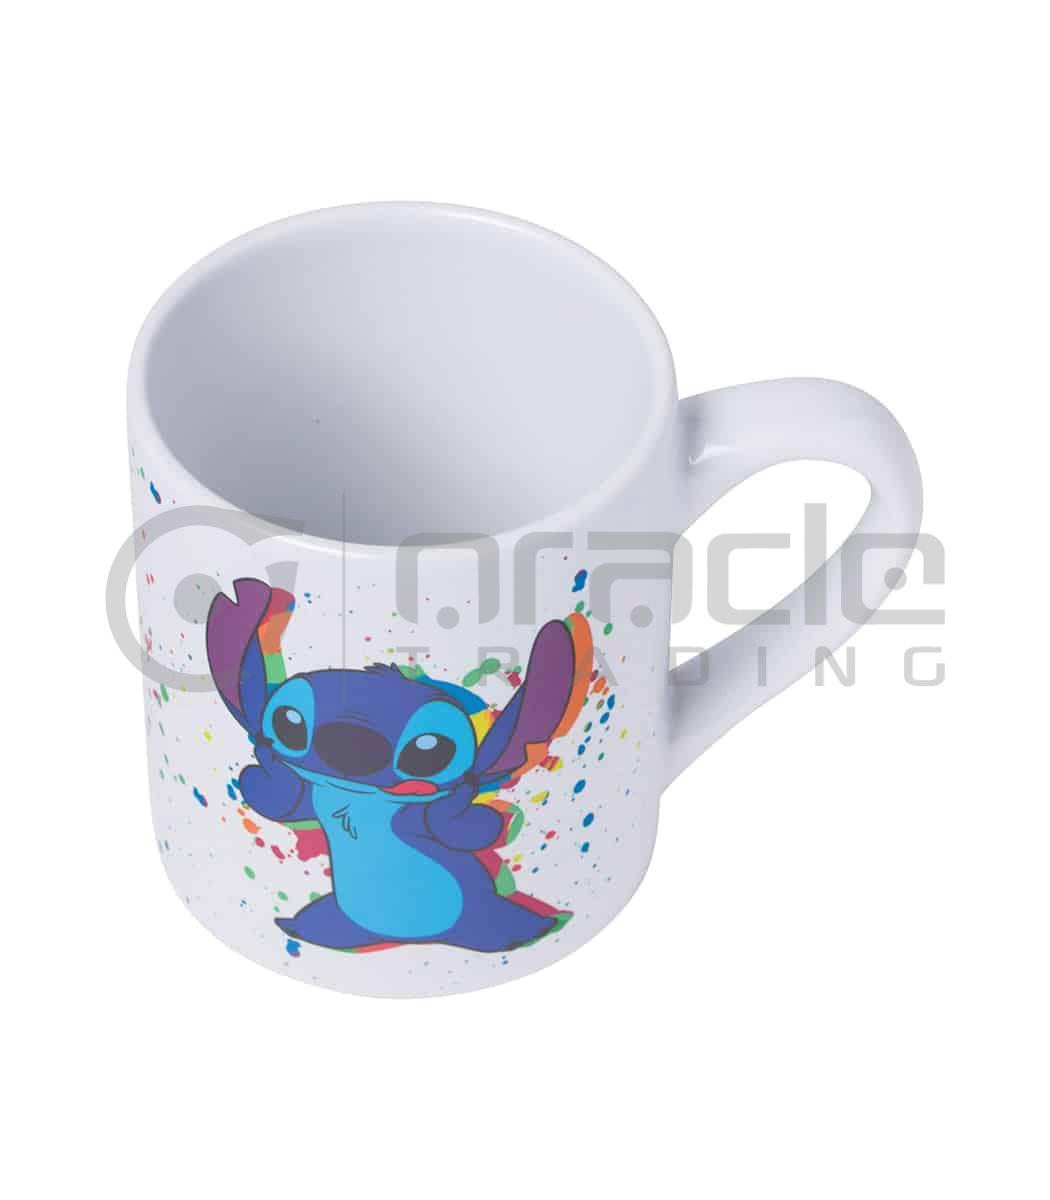 Lilo & Stitch Mug - Silliness (Glitter)